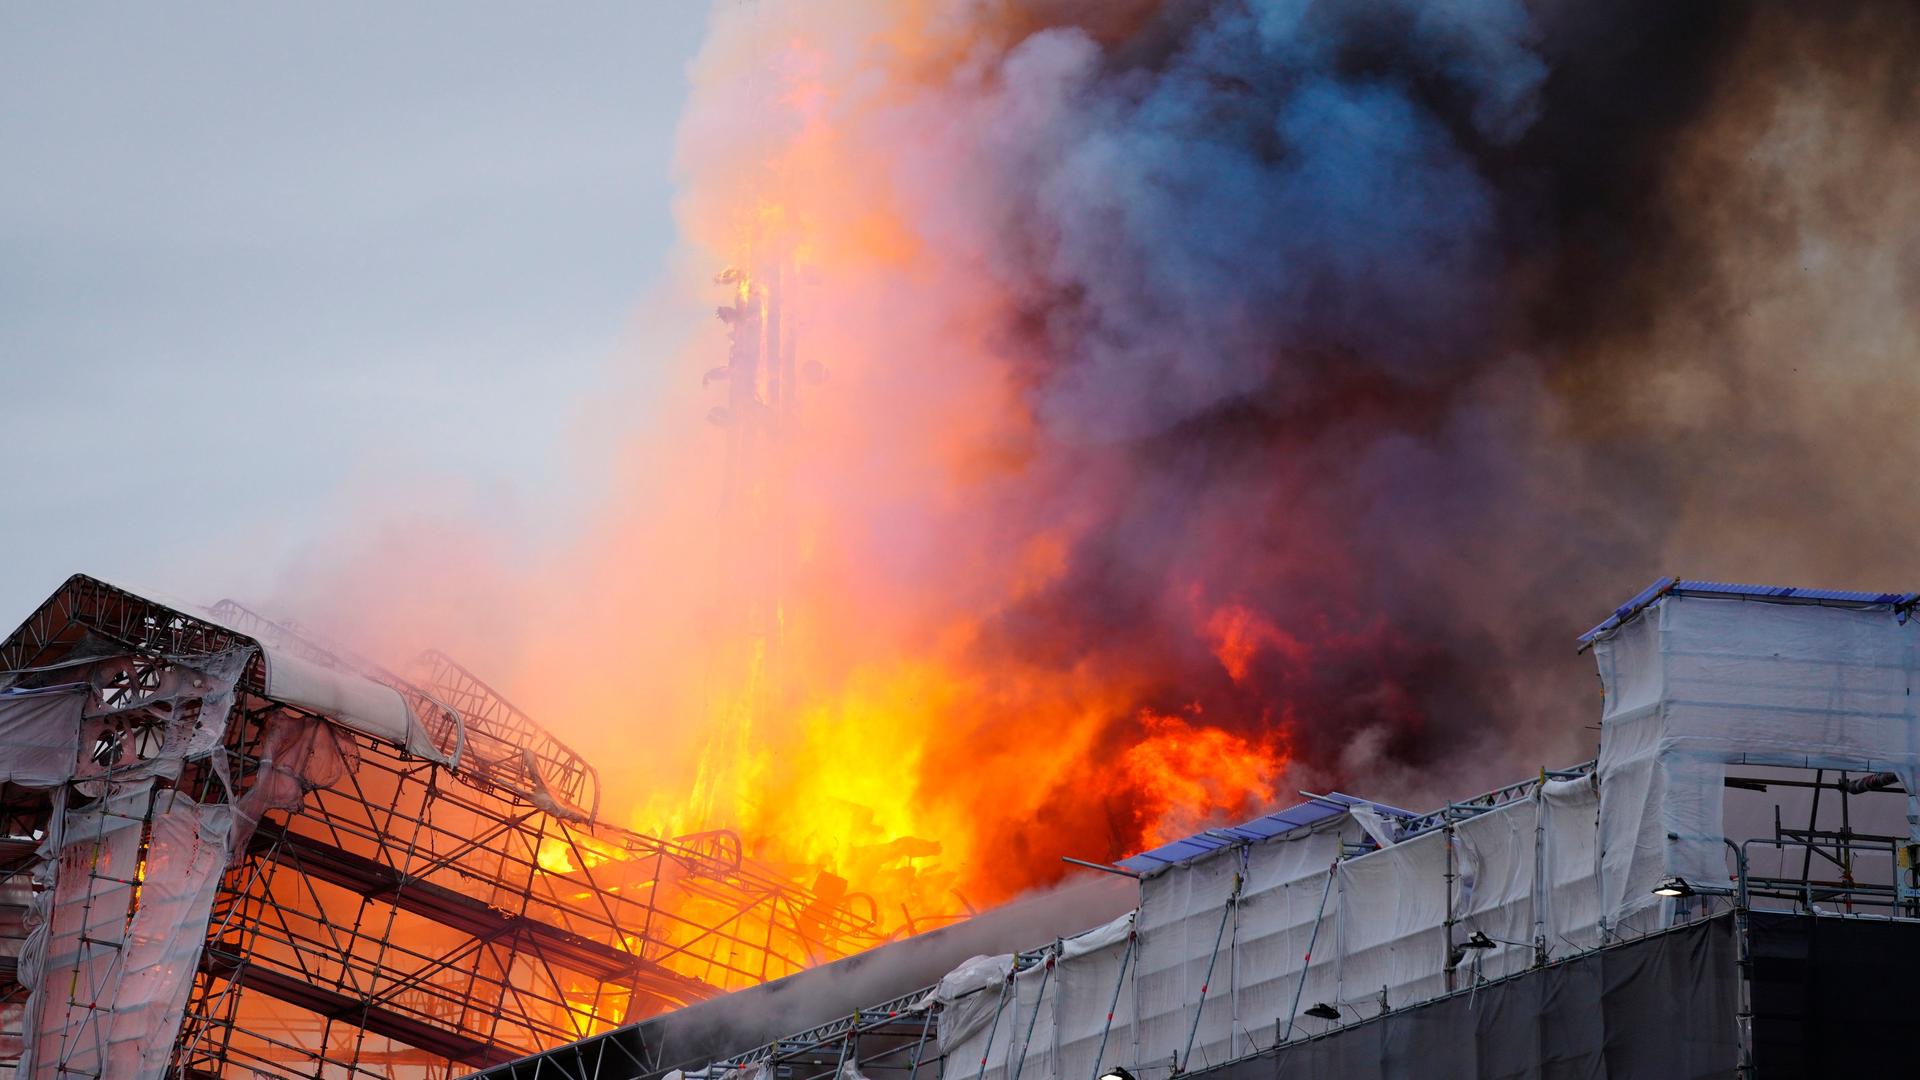 Dänemark - Historische Börse in Kopenhagen steht in Flammen